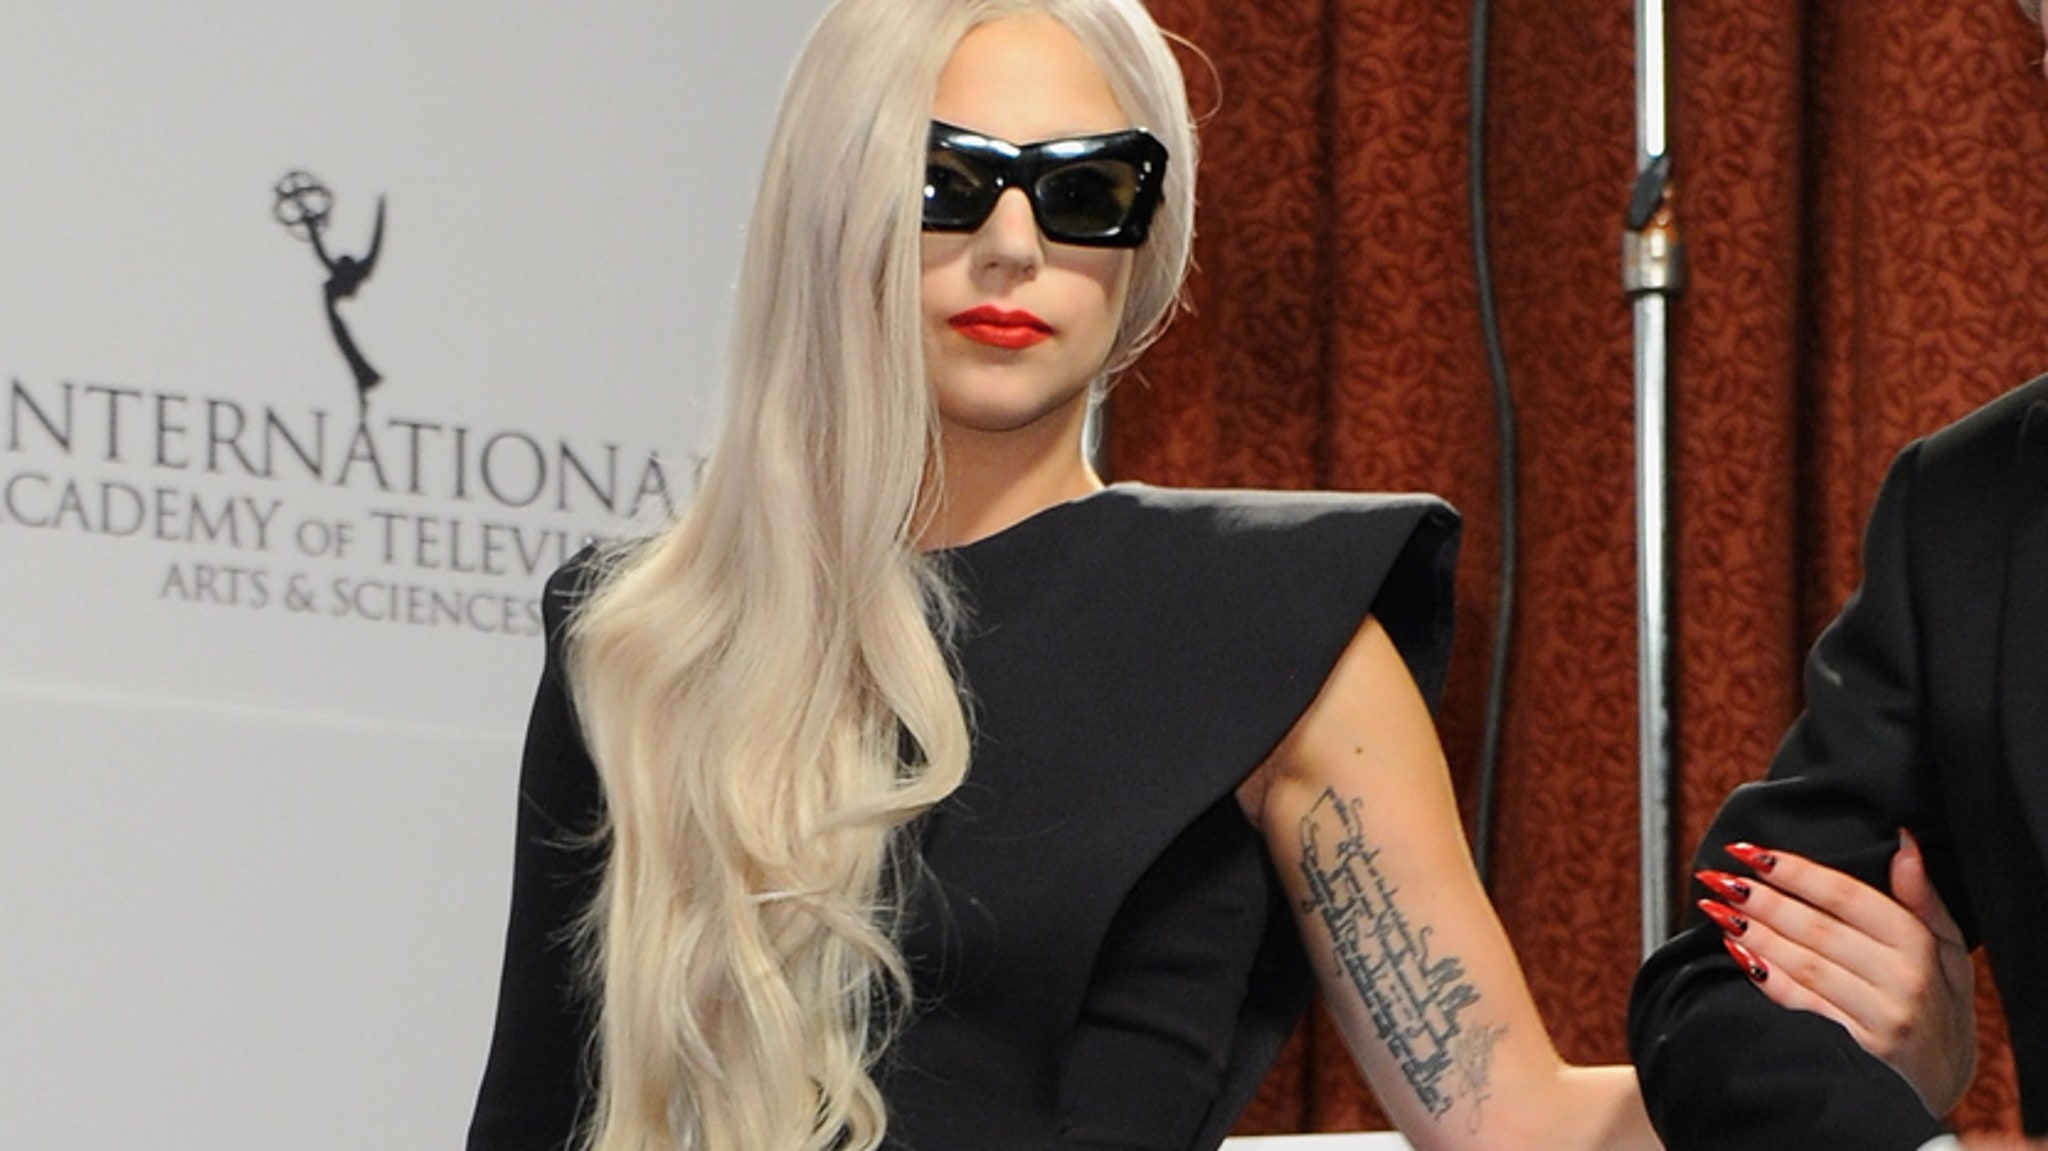 Whoa Lady Gaga Nearly Flashes All In Daring Dress